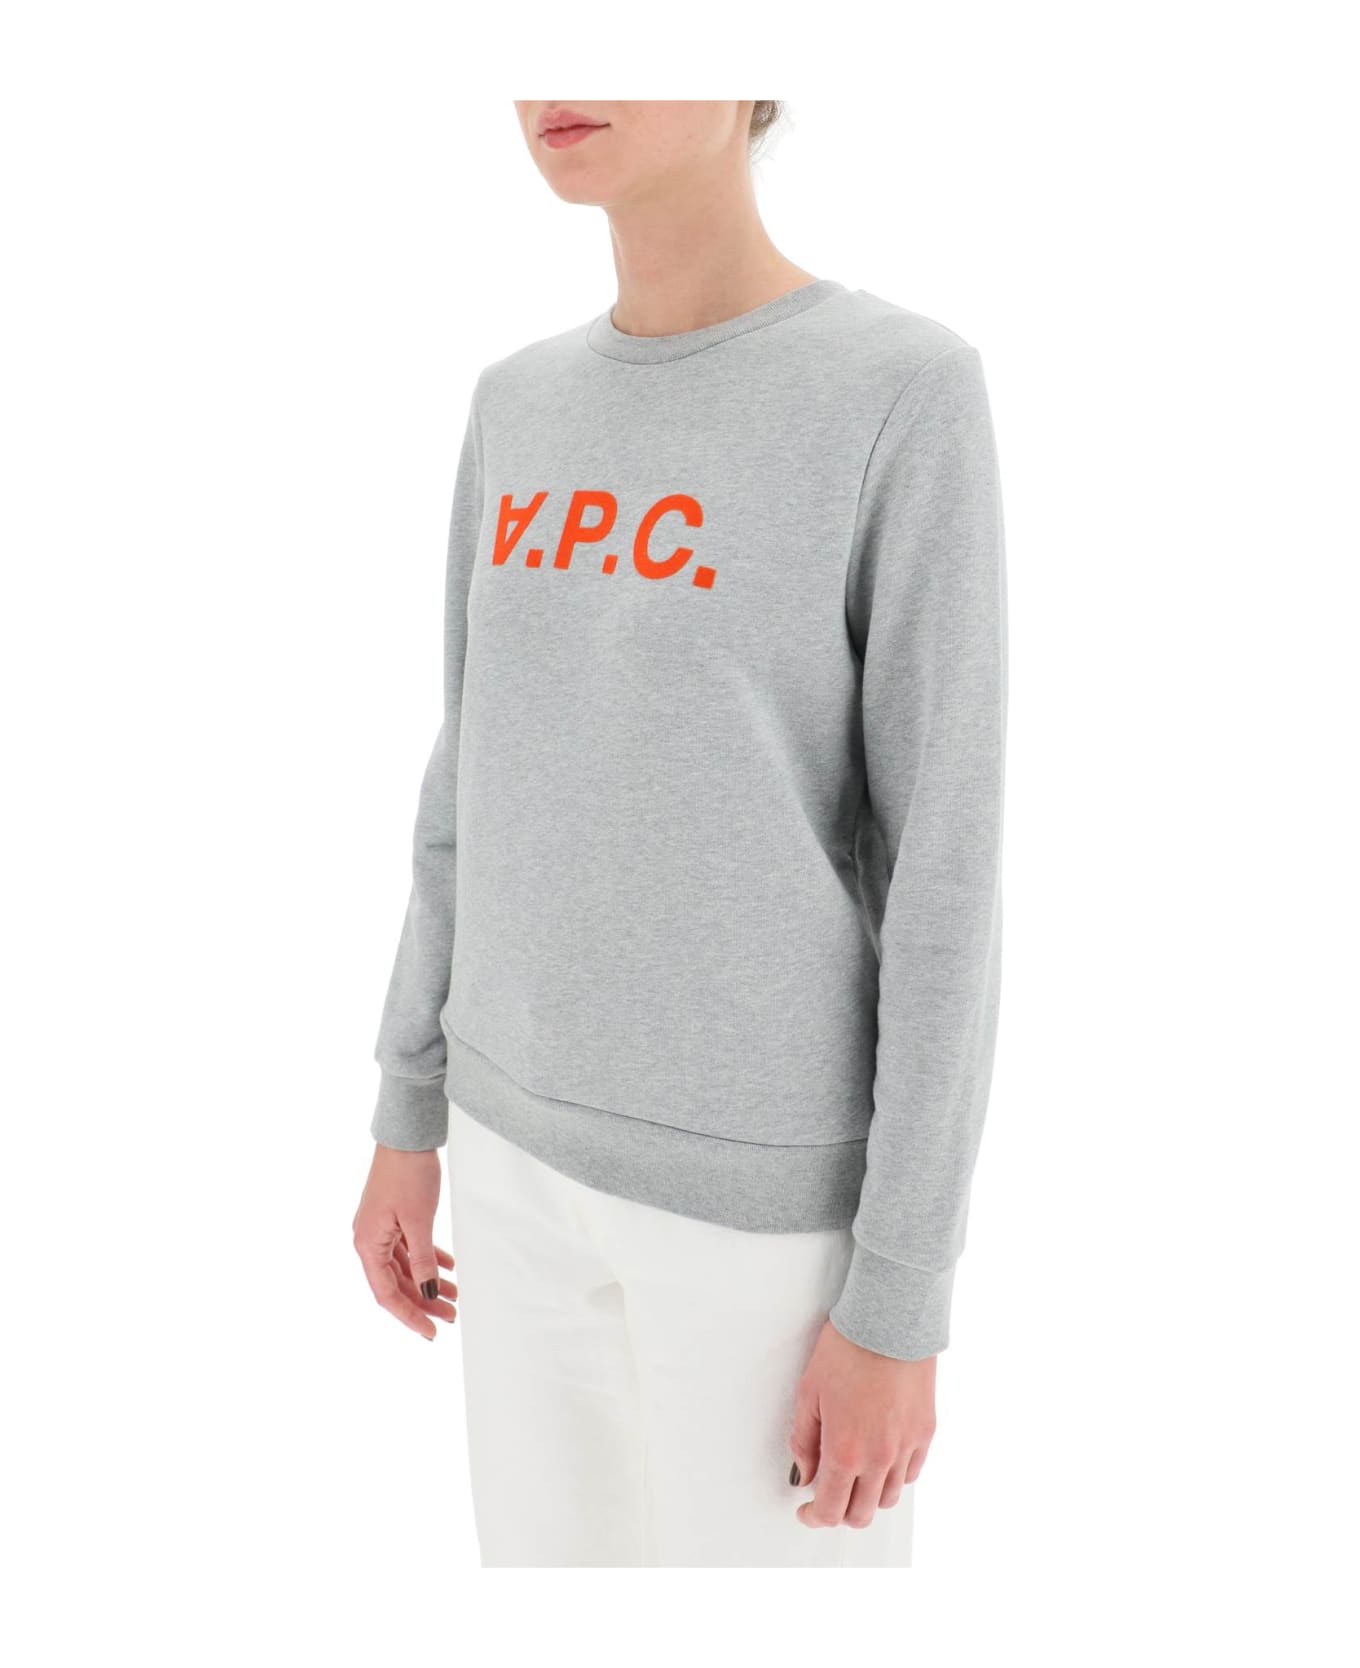 A.P.C. 'sweat Viva' Cotton Sweatshirt - GRIS CHINE VERMILLON (Grey)